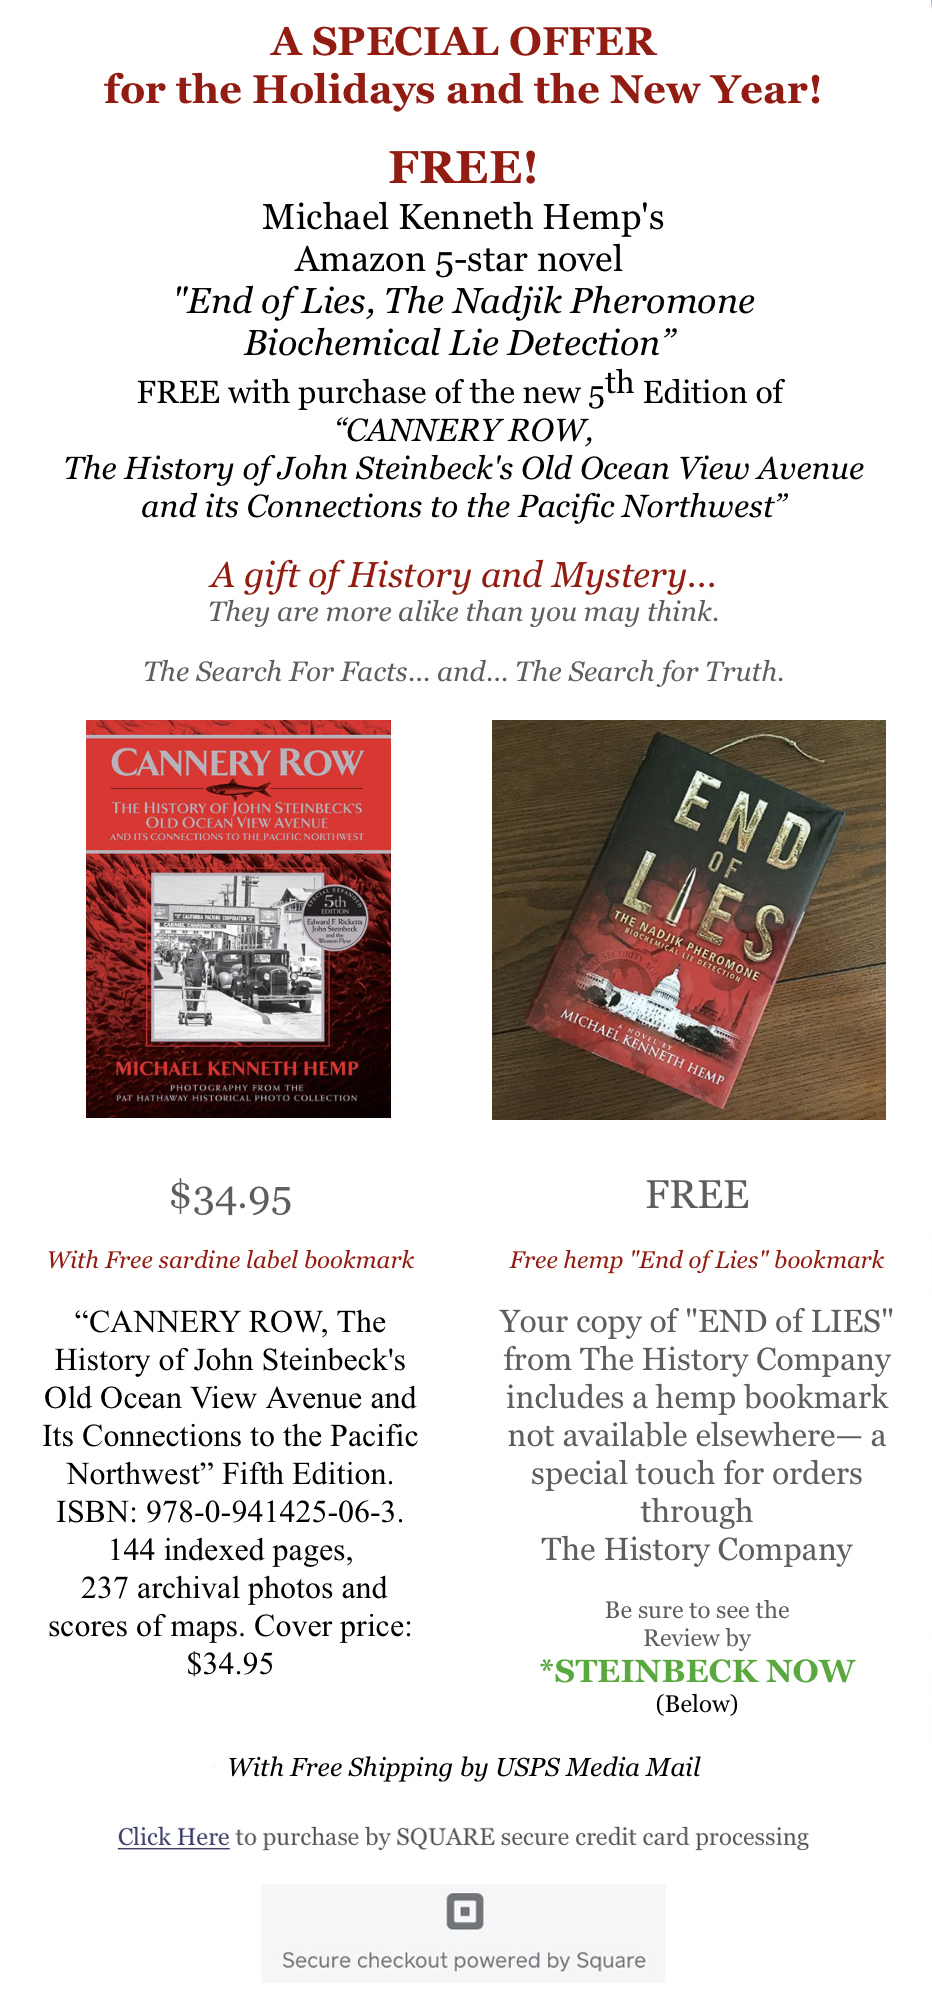 Steinbeck
                                                          Now 2-book
                                                          offer